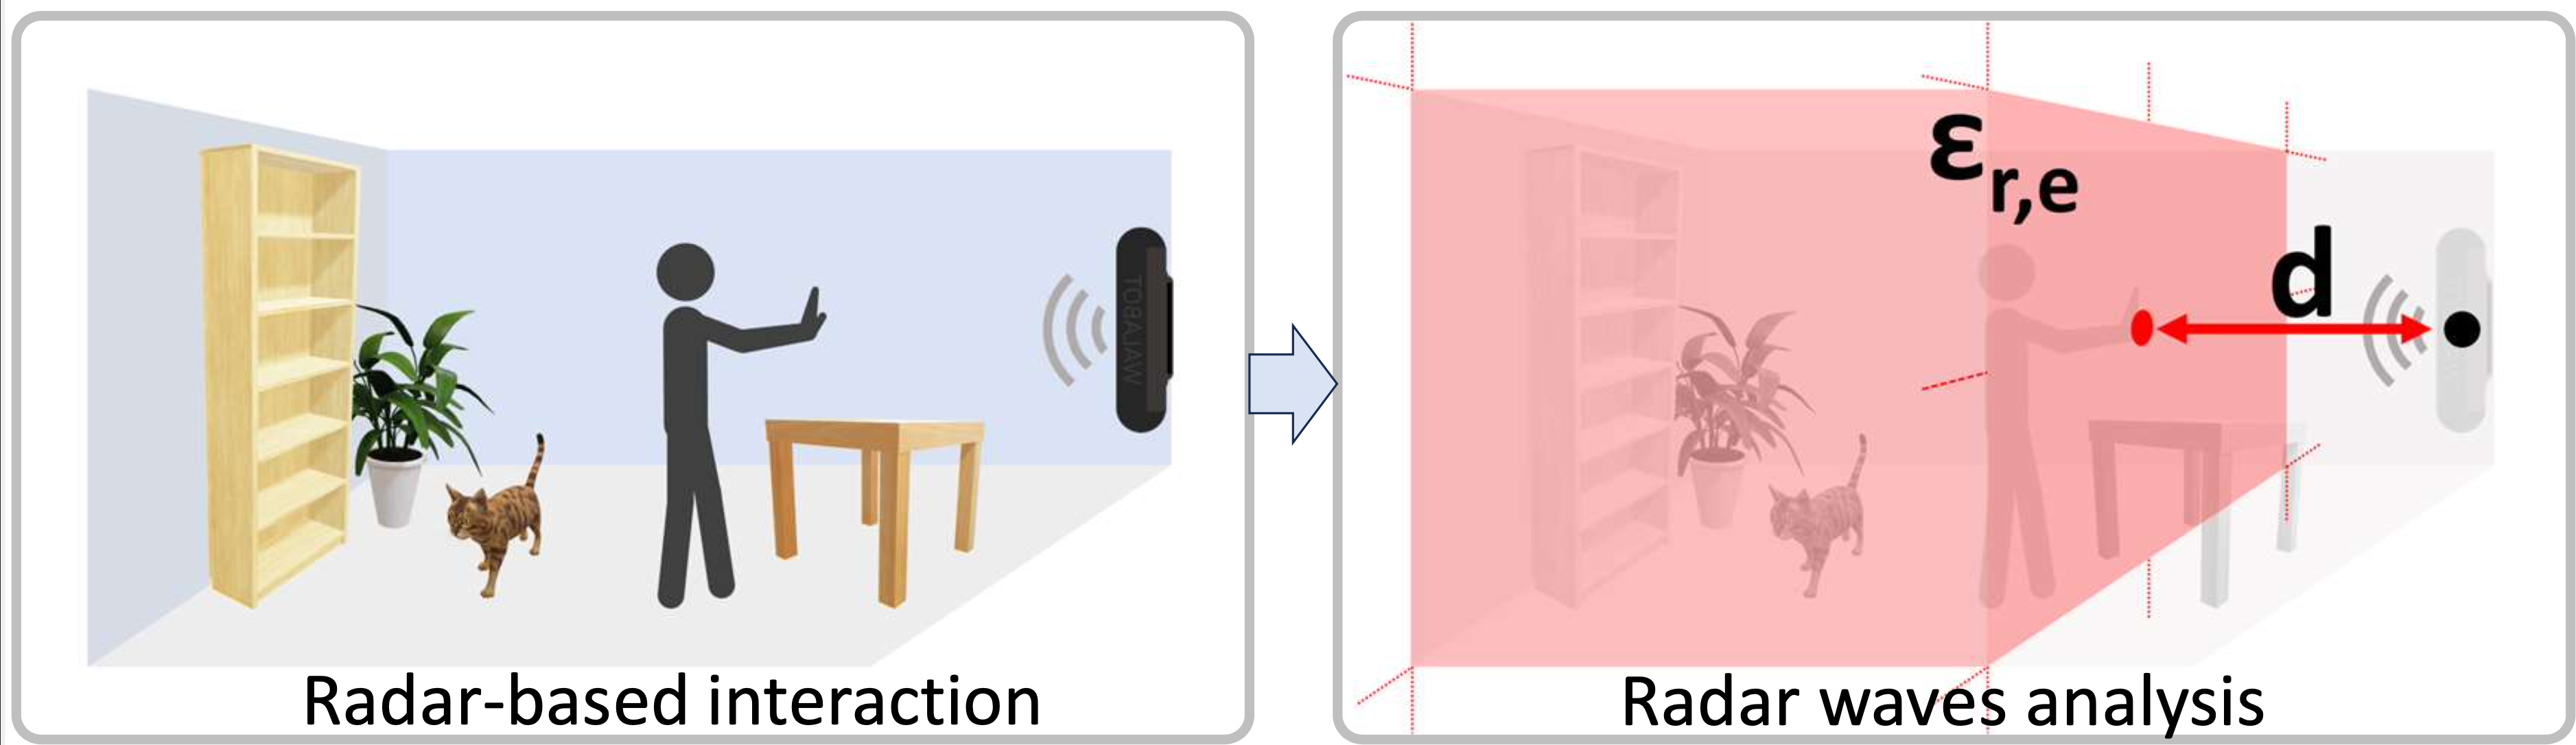 Radar-based interaction